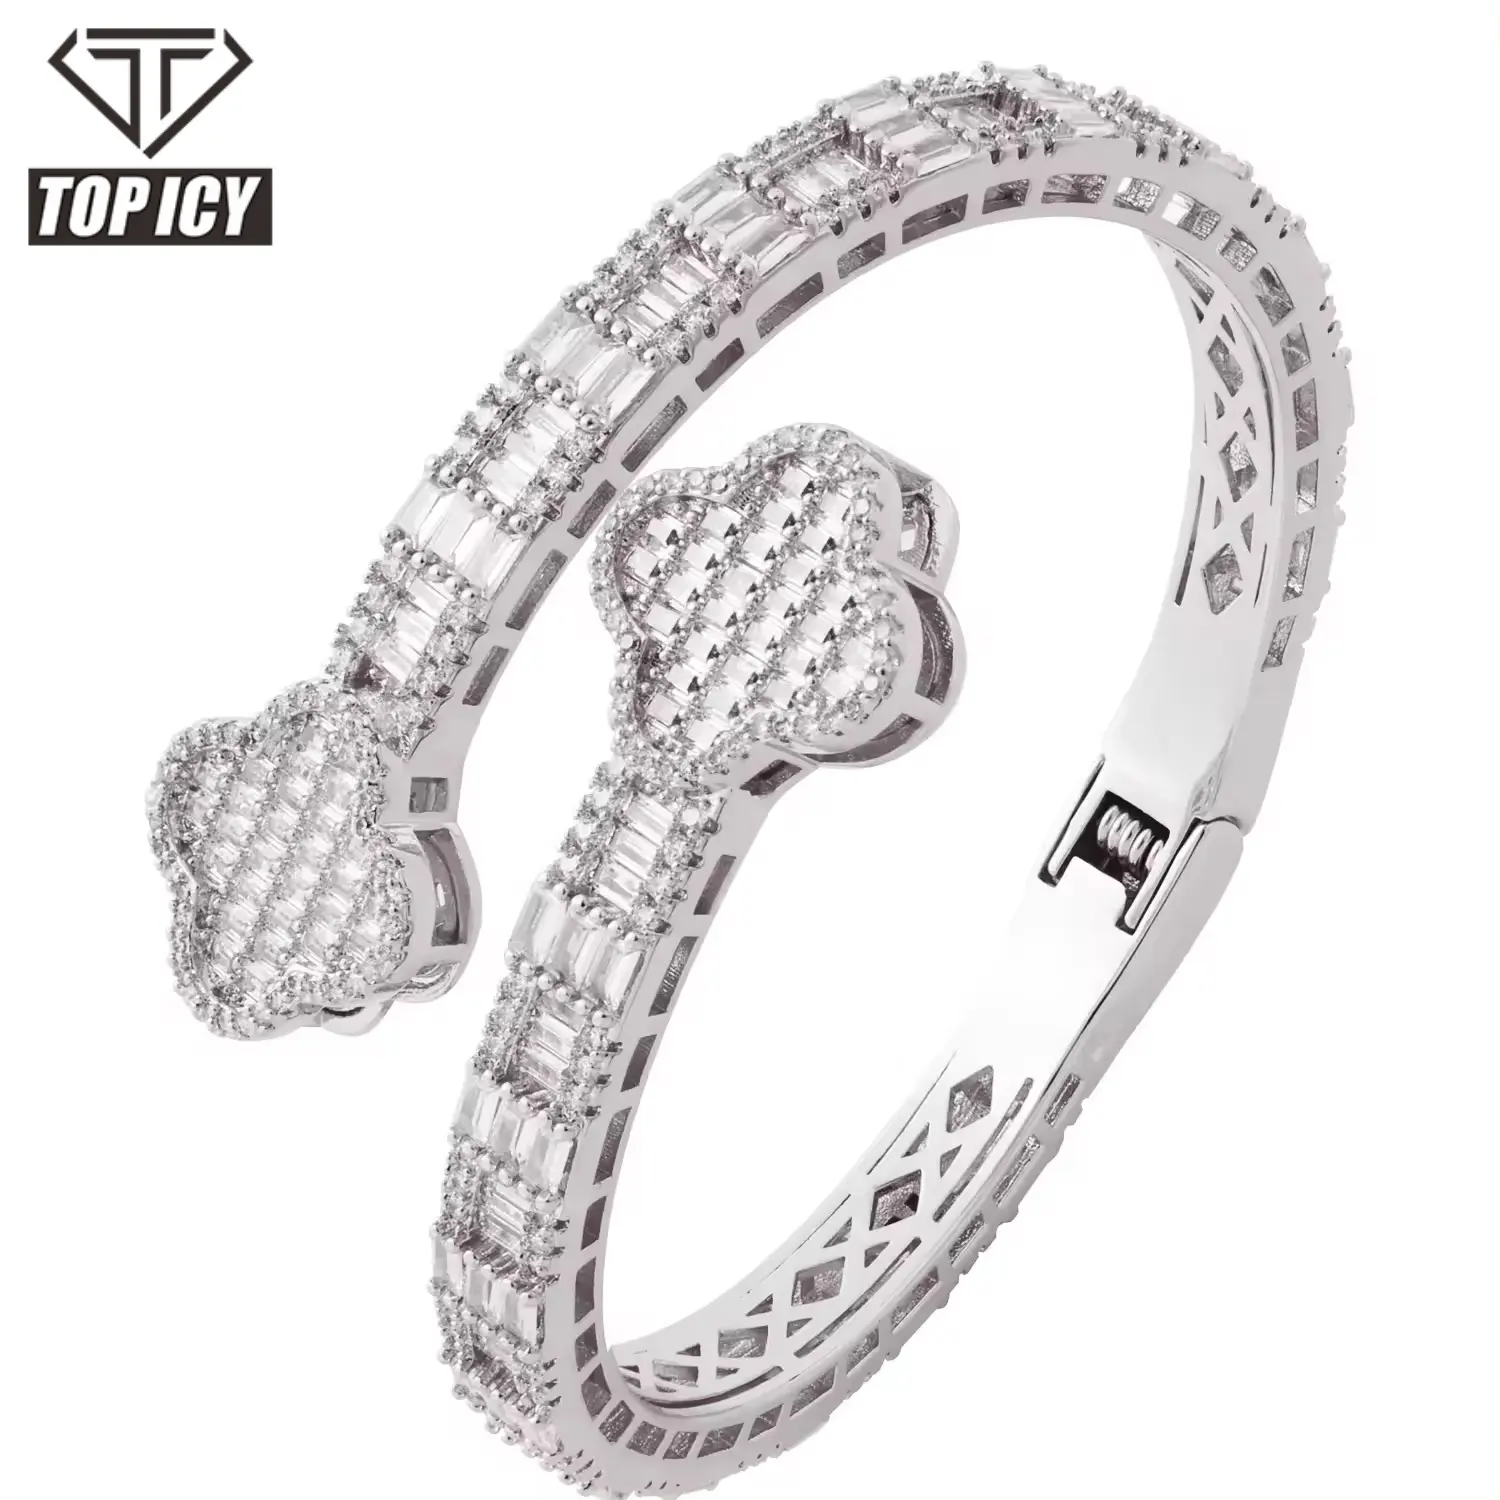 Nouveau Design Fashion Clover Jewelry Bracelets Bangles Hip Hop Femmes Hommes Bangles Sliver Gold Iced Out Jewelry